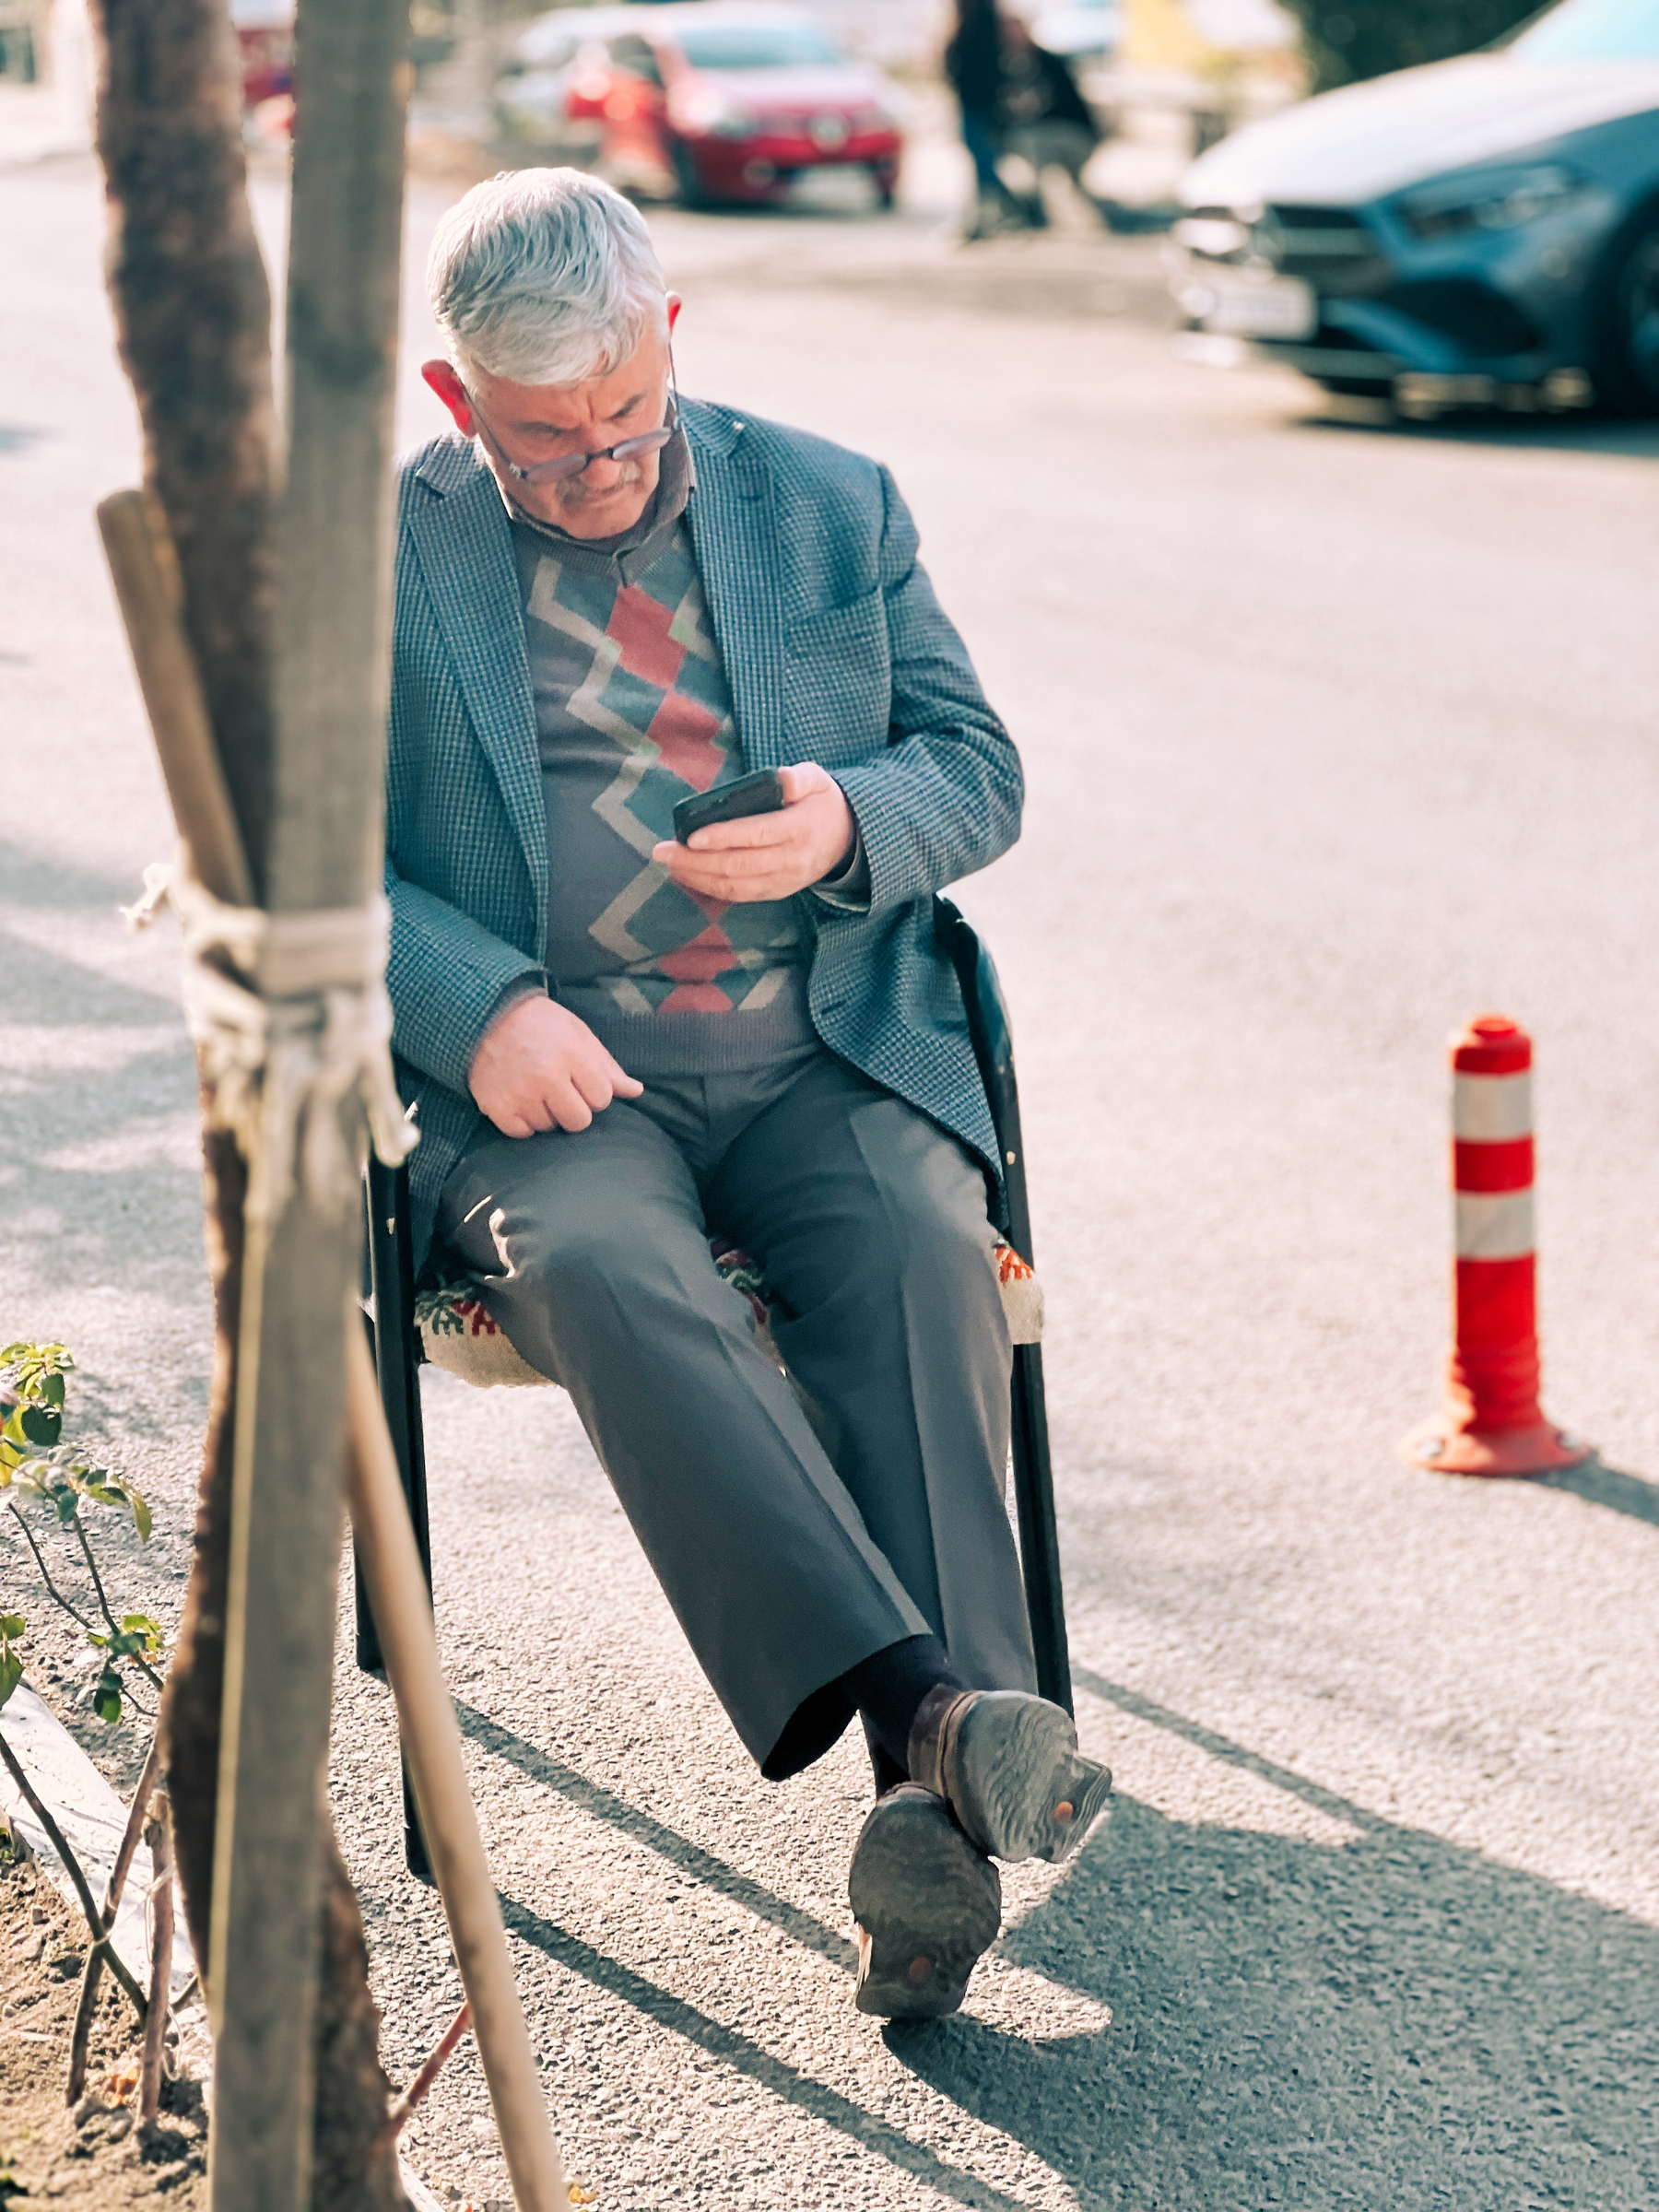 Old man checks his smartphone.